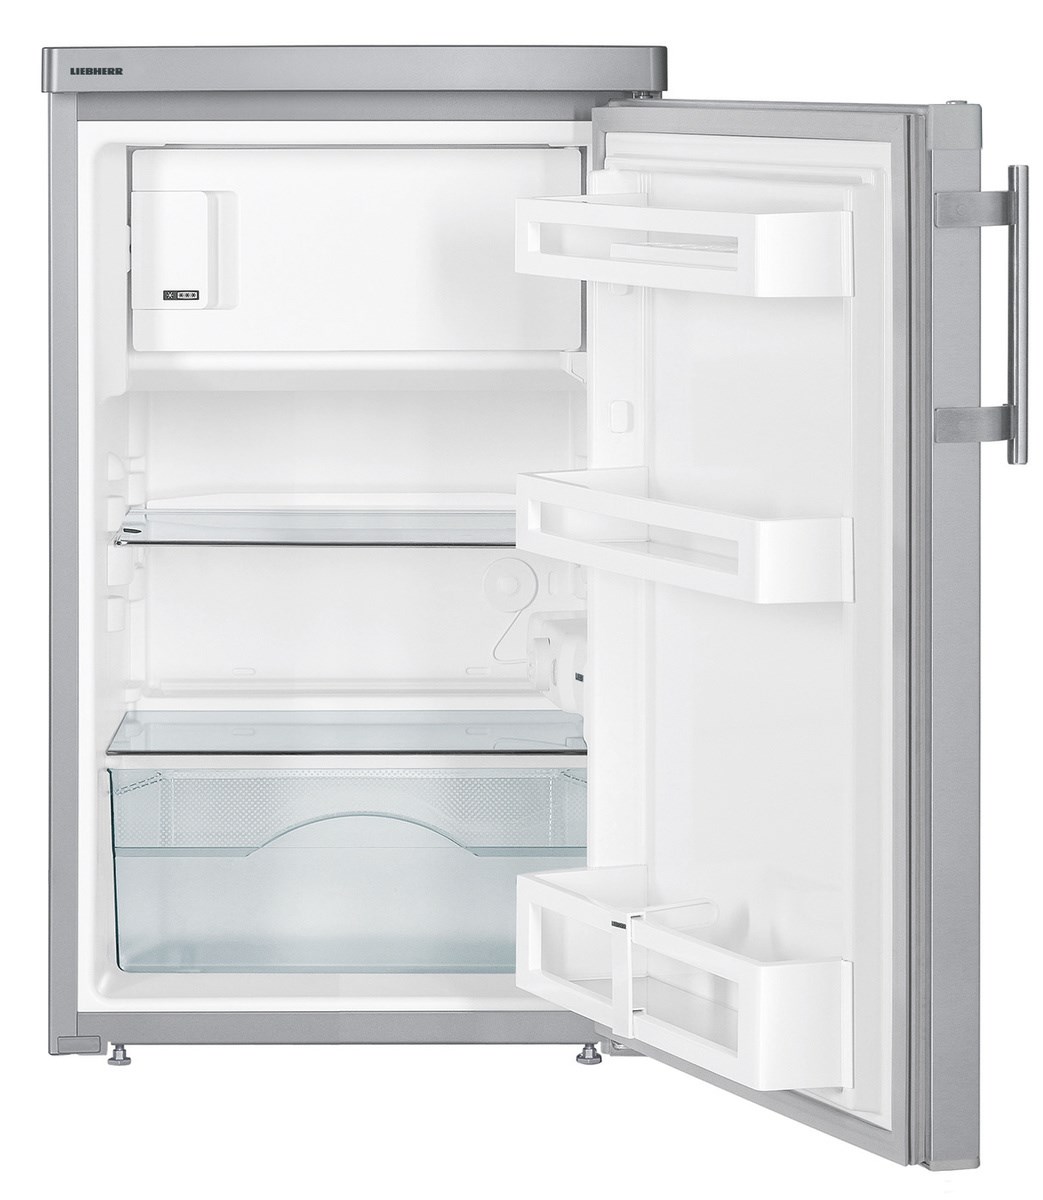 Tsl 1414 Comfort Table top refrigerator